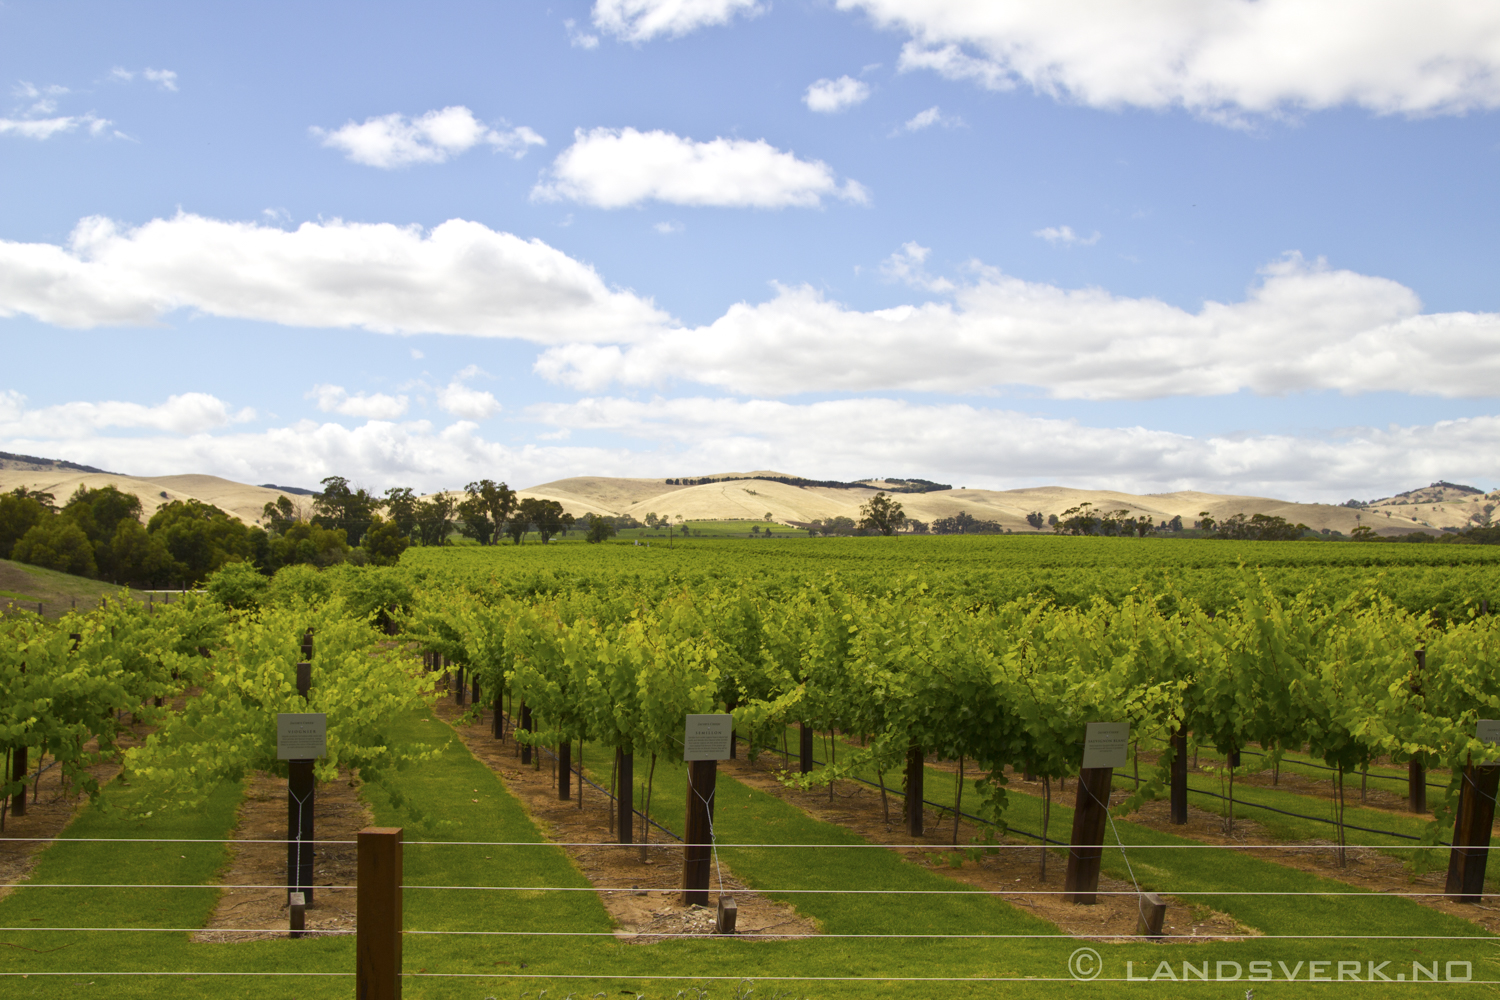 Jacob's Creek vineyards, Barossa Valley, South Australia. 

(Canon EOS 550D / Sigma 18-50mm F2.8)